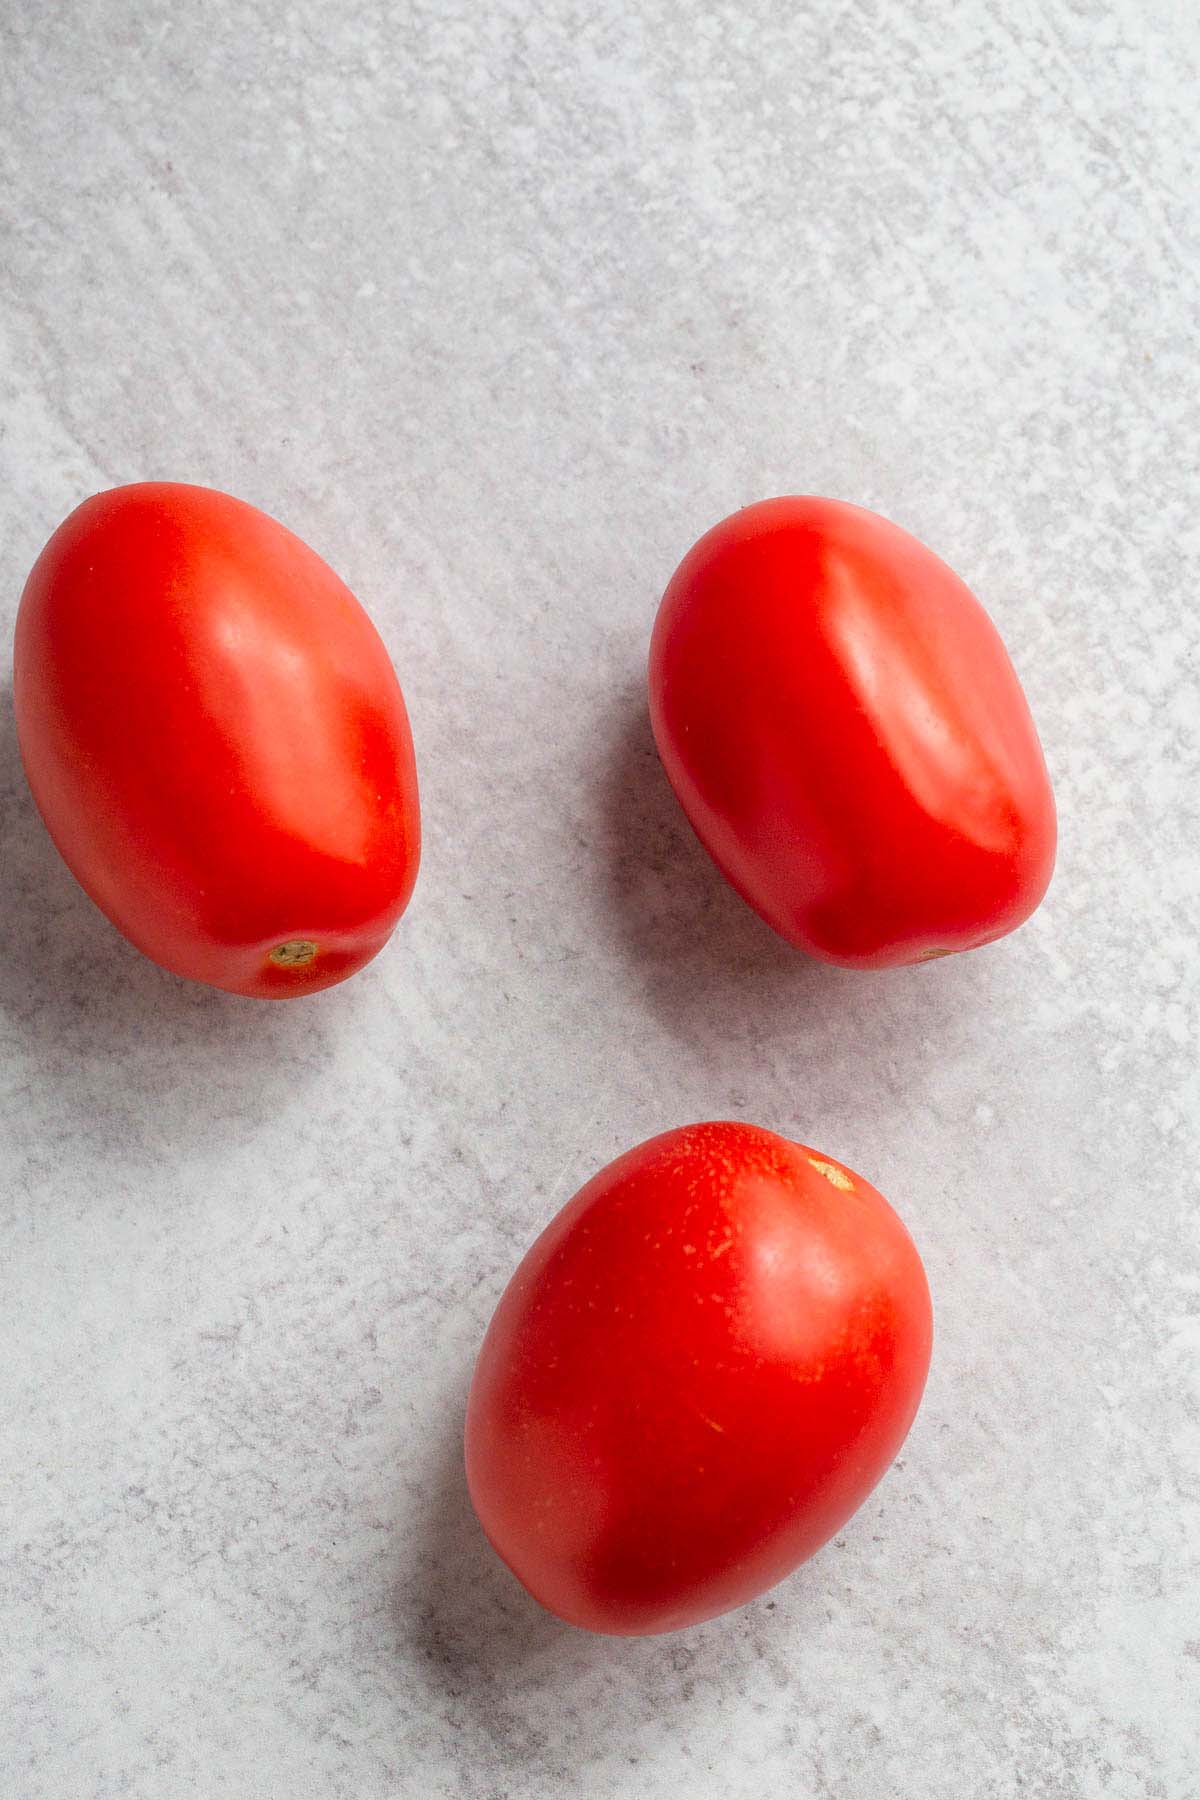 Three roma tomatoes